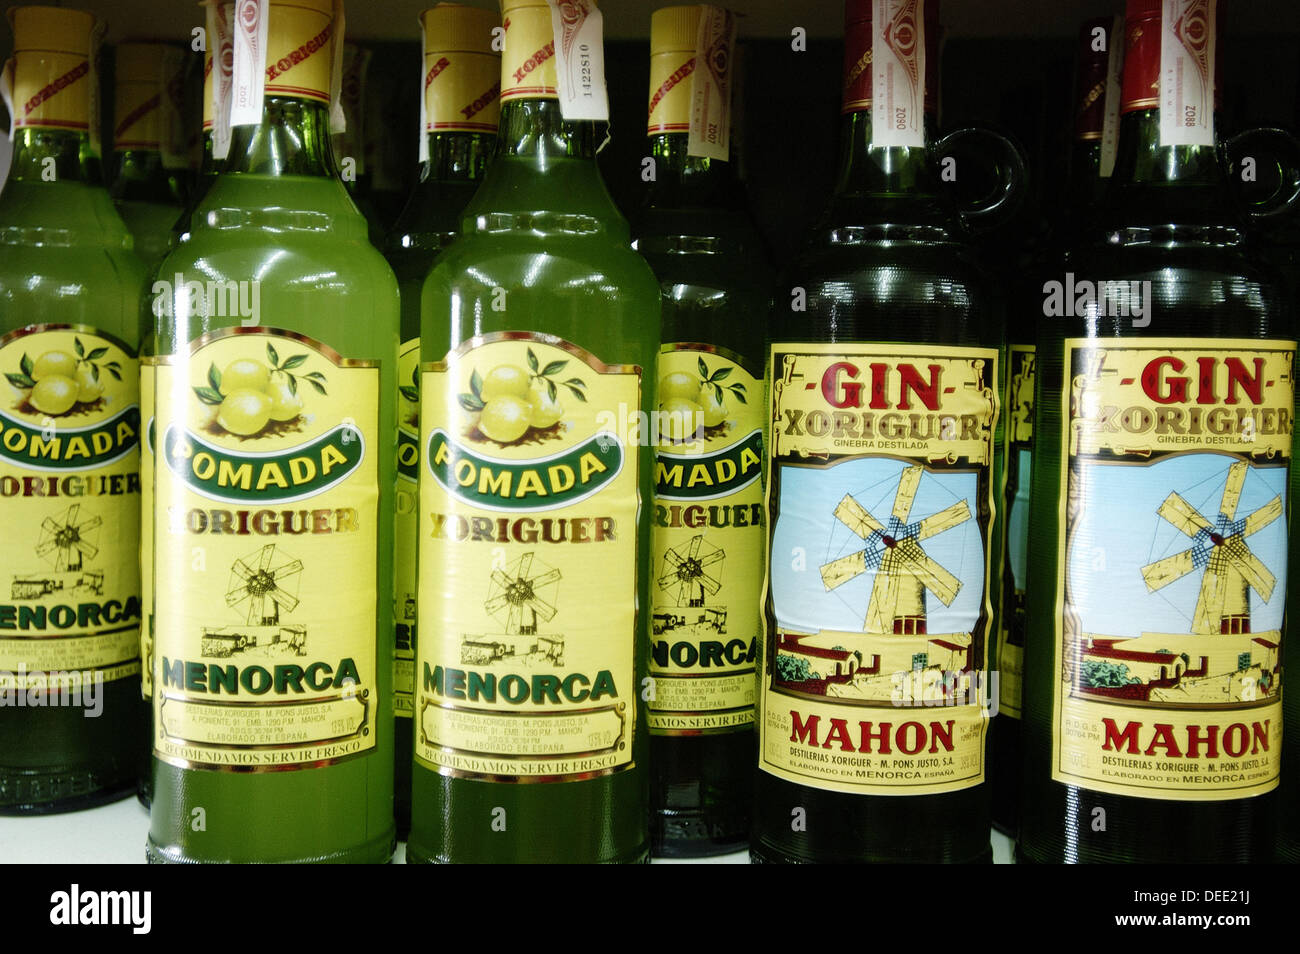 Et Gin Xoriguer Pomada. Minorque. Îles Baléares. Espagne Photo Stock - Alamy